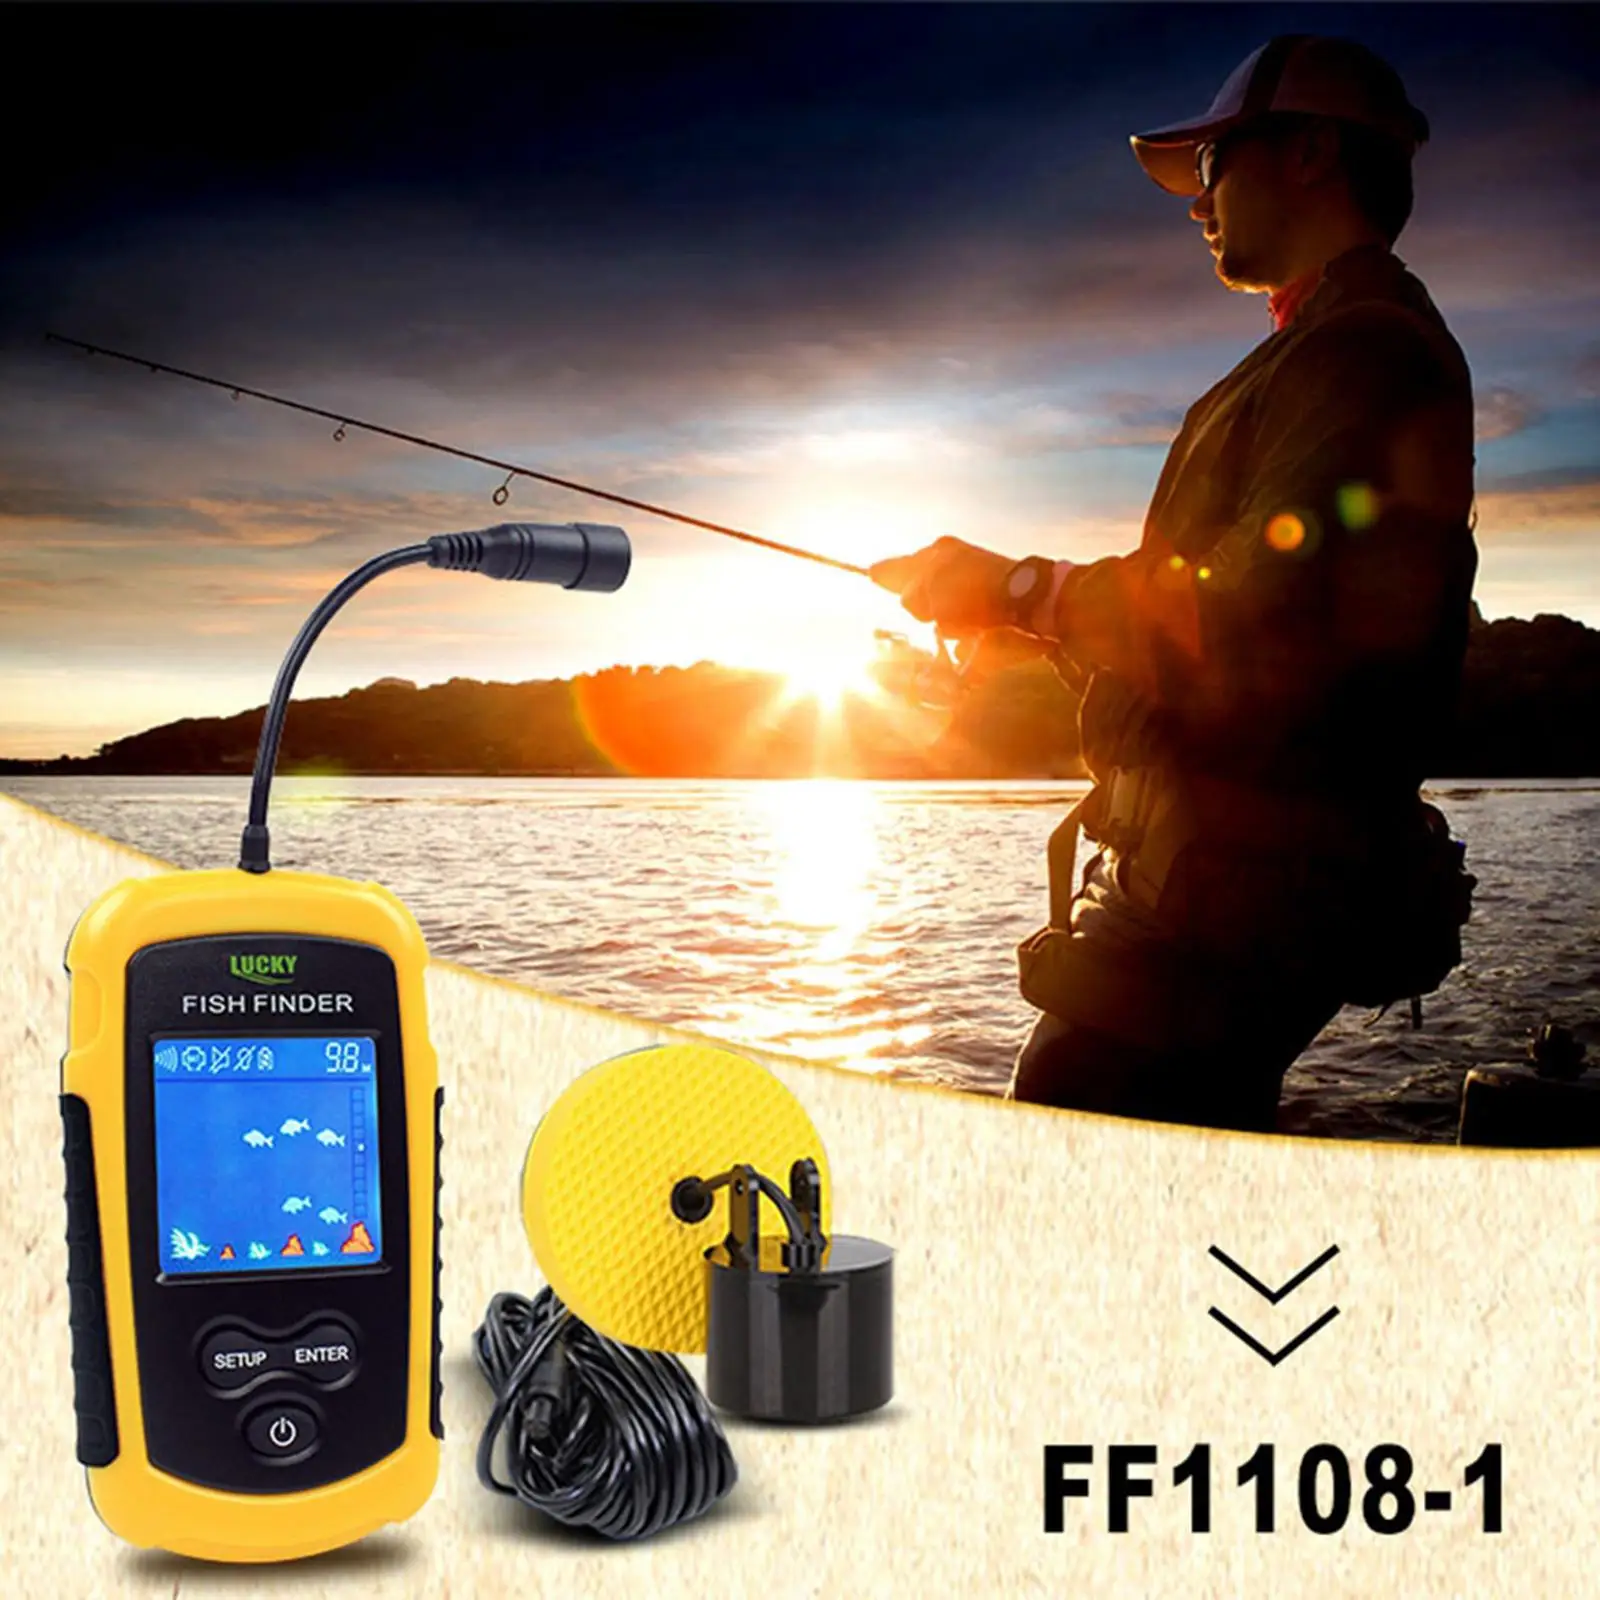 Handheld Fish Finder Portable, Fishing Kayak Fishfinder, Fish Depth Finder